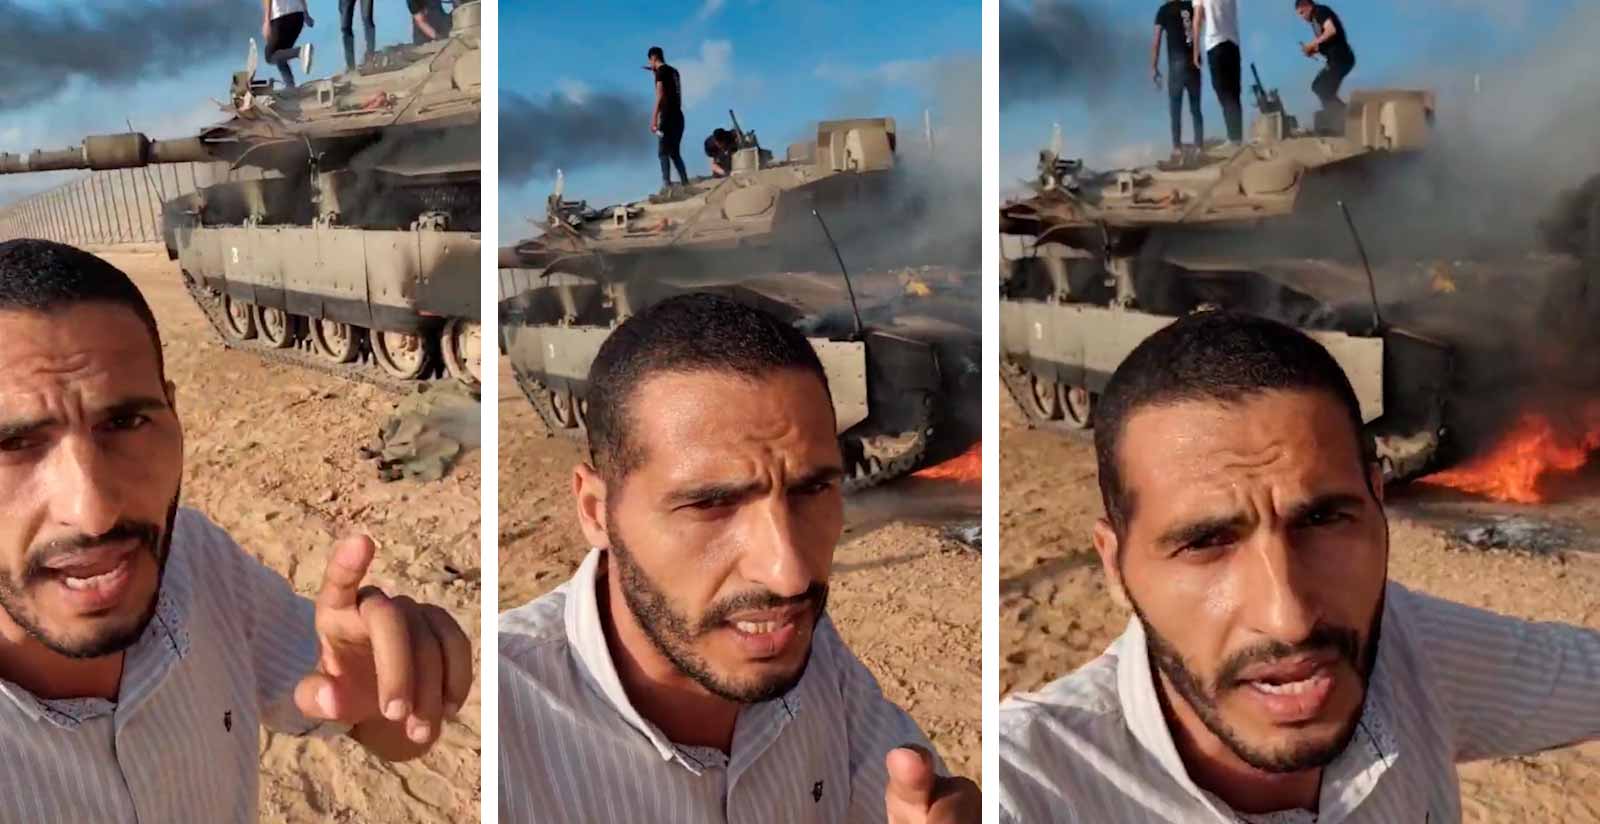 Video shows Israeli Merkava tank in flames after being destroyed by Palestinians. Photo and video: Telegram t.me/SputnikBrasil